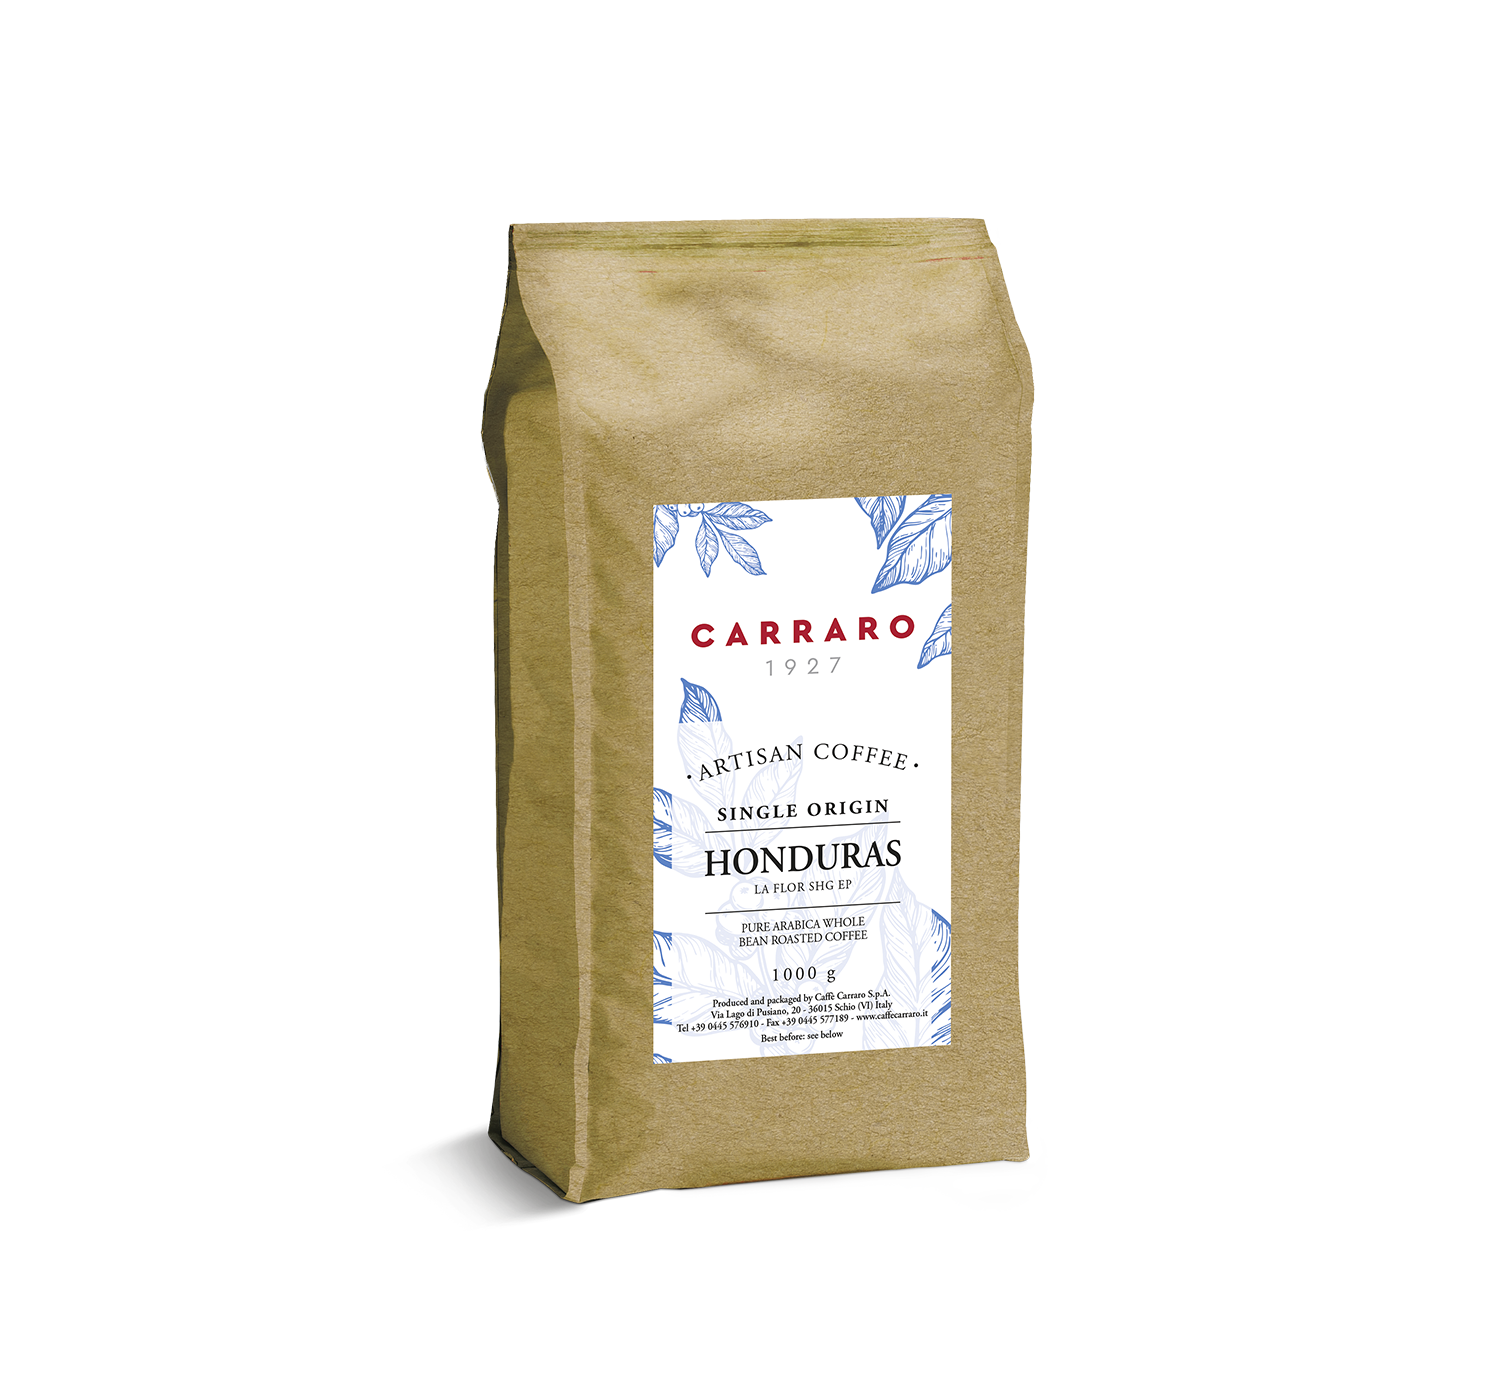 Artisan Coffee - Honduras – caffè in grani 1000 g - Shop online Caffè Carraro